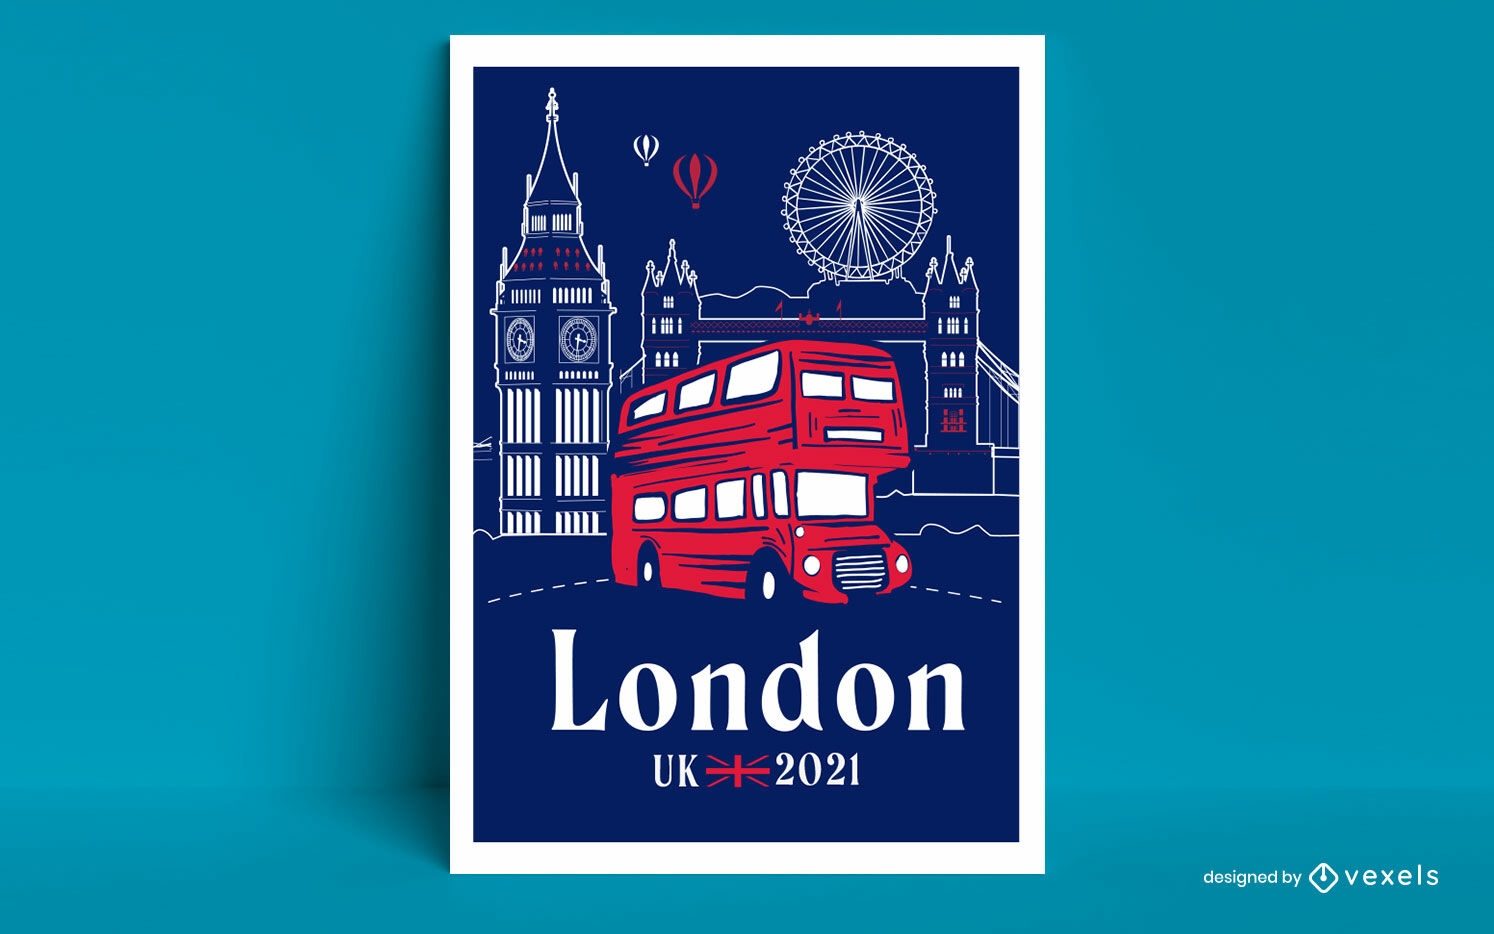 London city tourist bus travel poster design